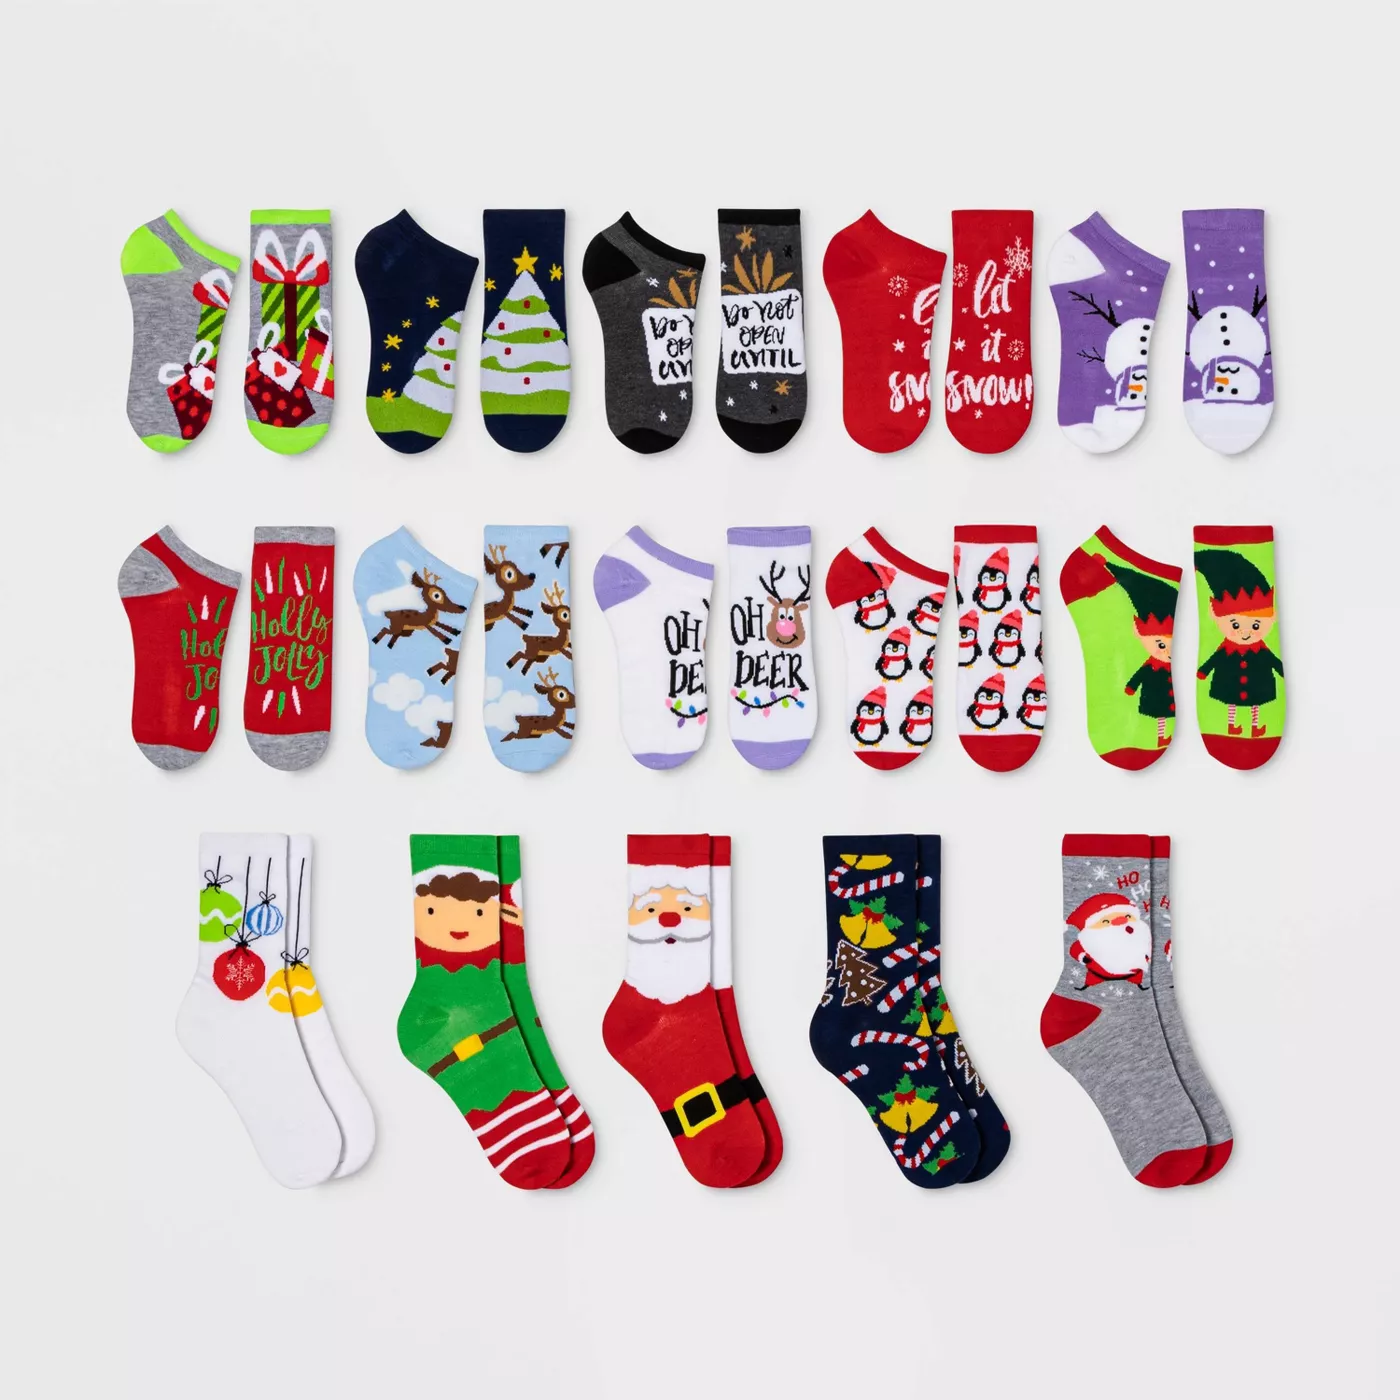 2020 Target Socks Advent Calendars Available Now Hello Subscription